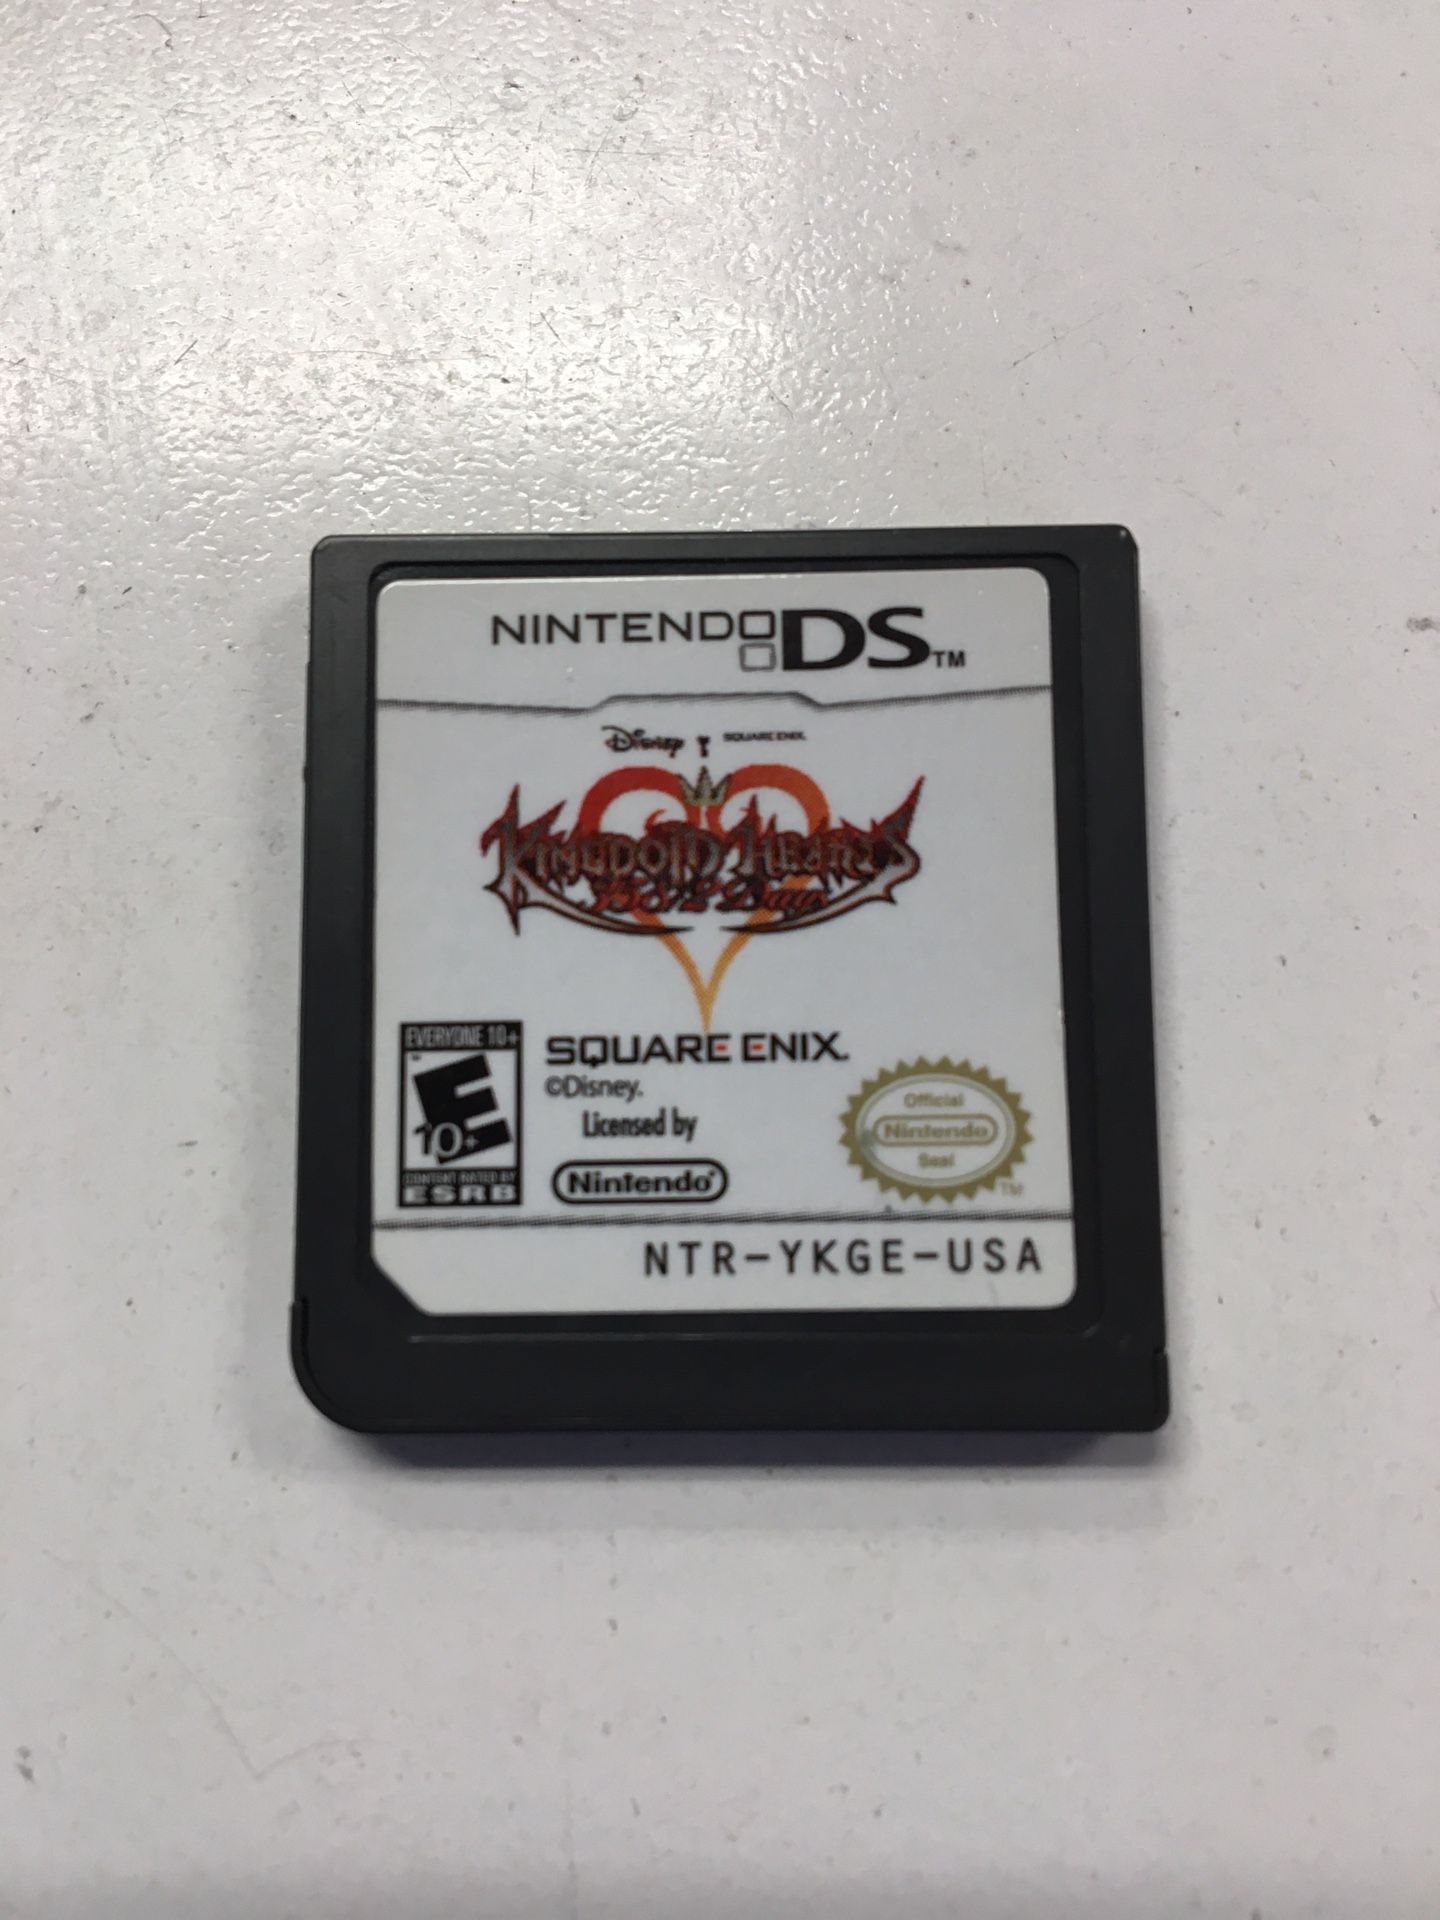 Kingdom Hearts 358/2 Days for Nintendo DS